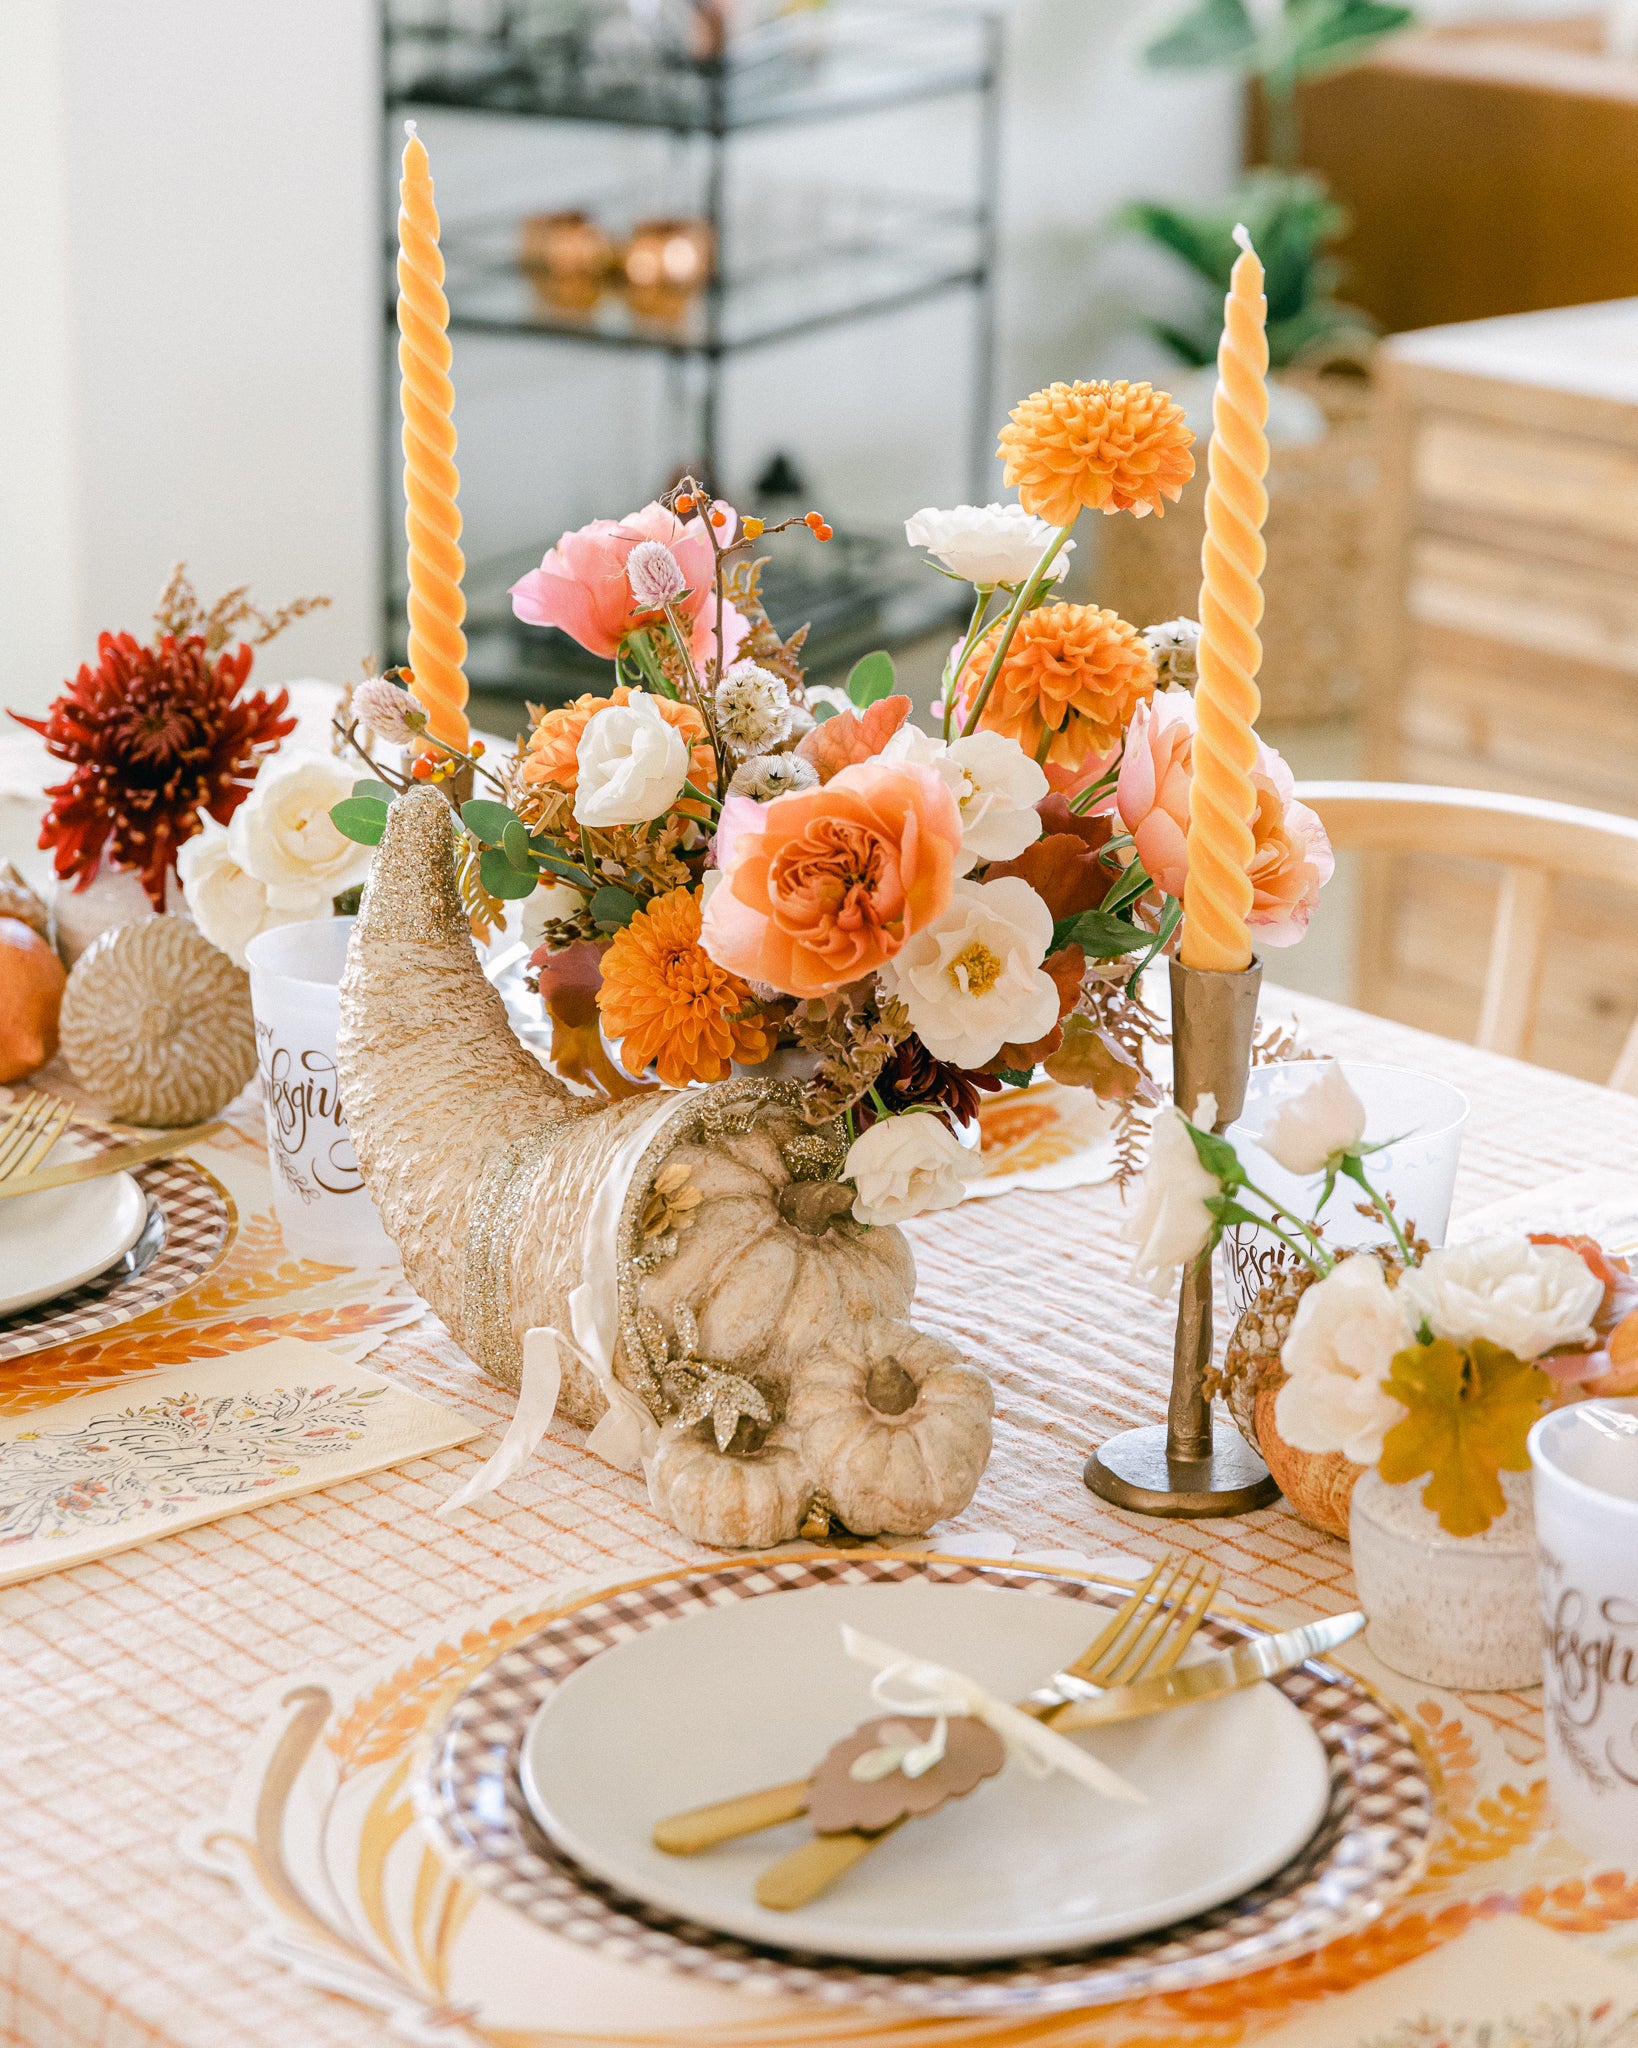 Thanksgiving centerpiece ideas with florals.